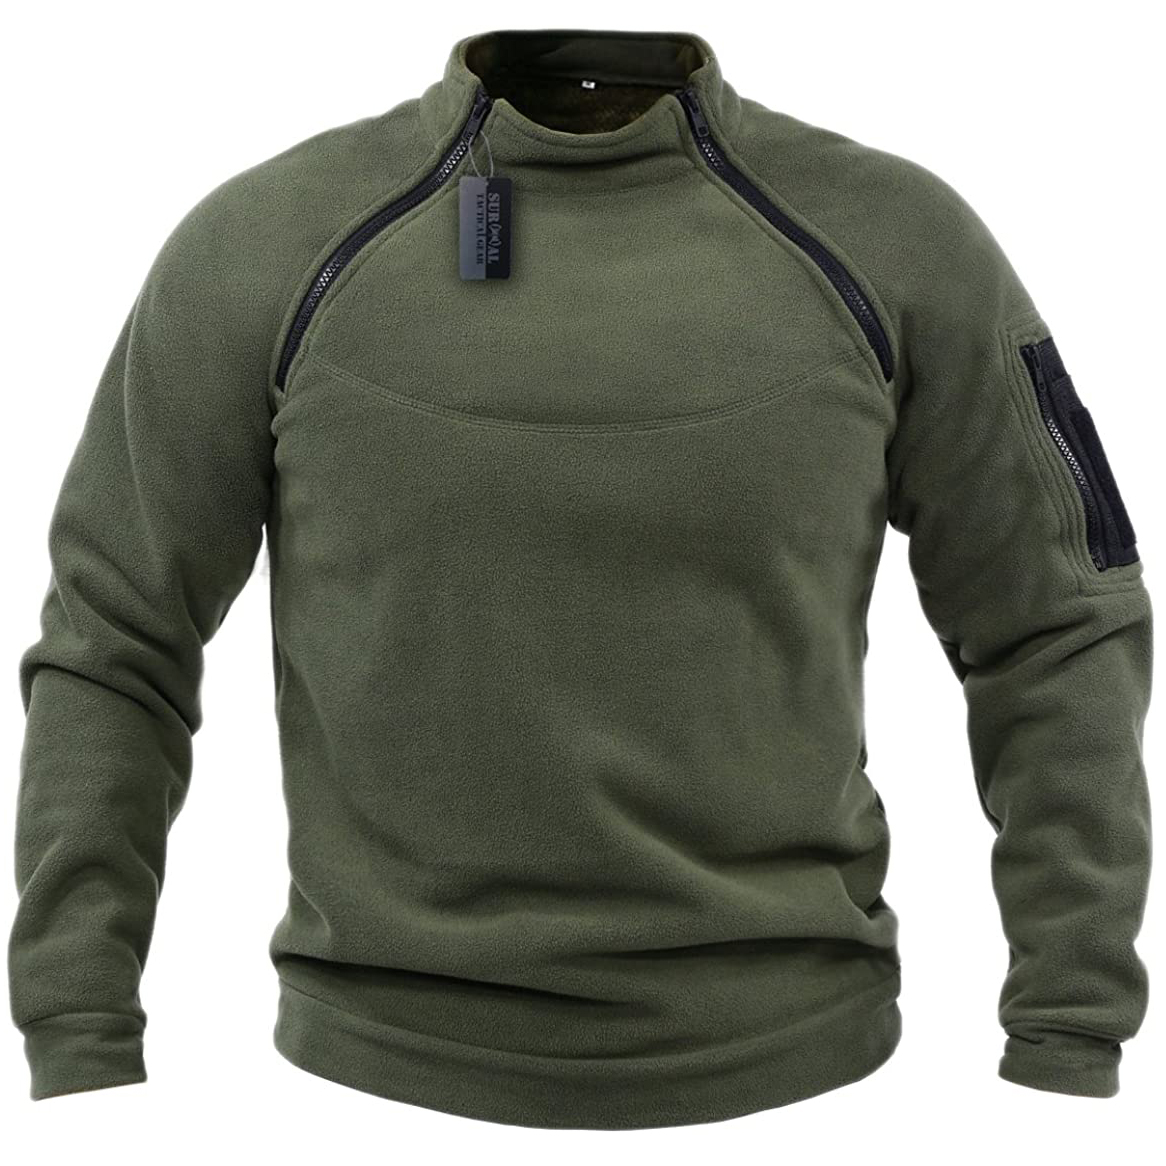 Mens Outdoor Fleece Warm And Chic Breathable Tactical Sweatshirt